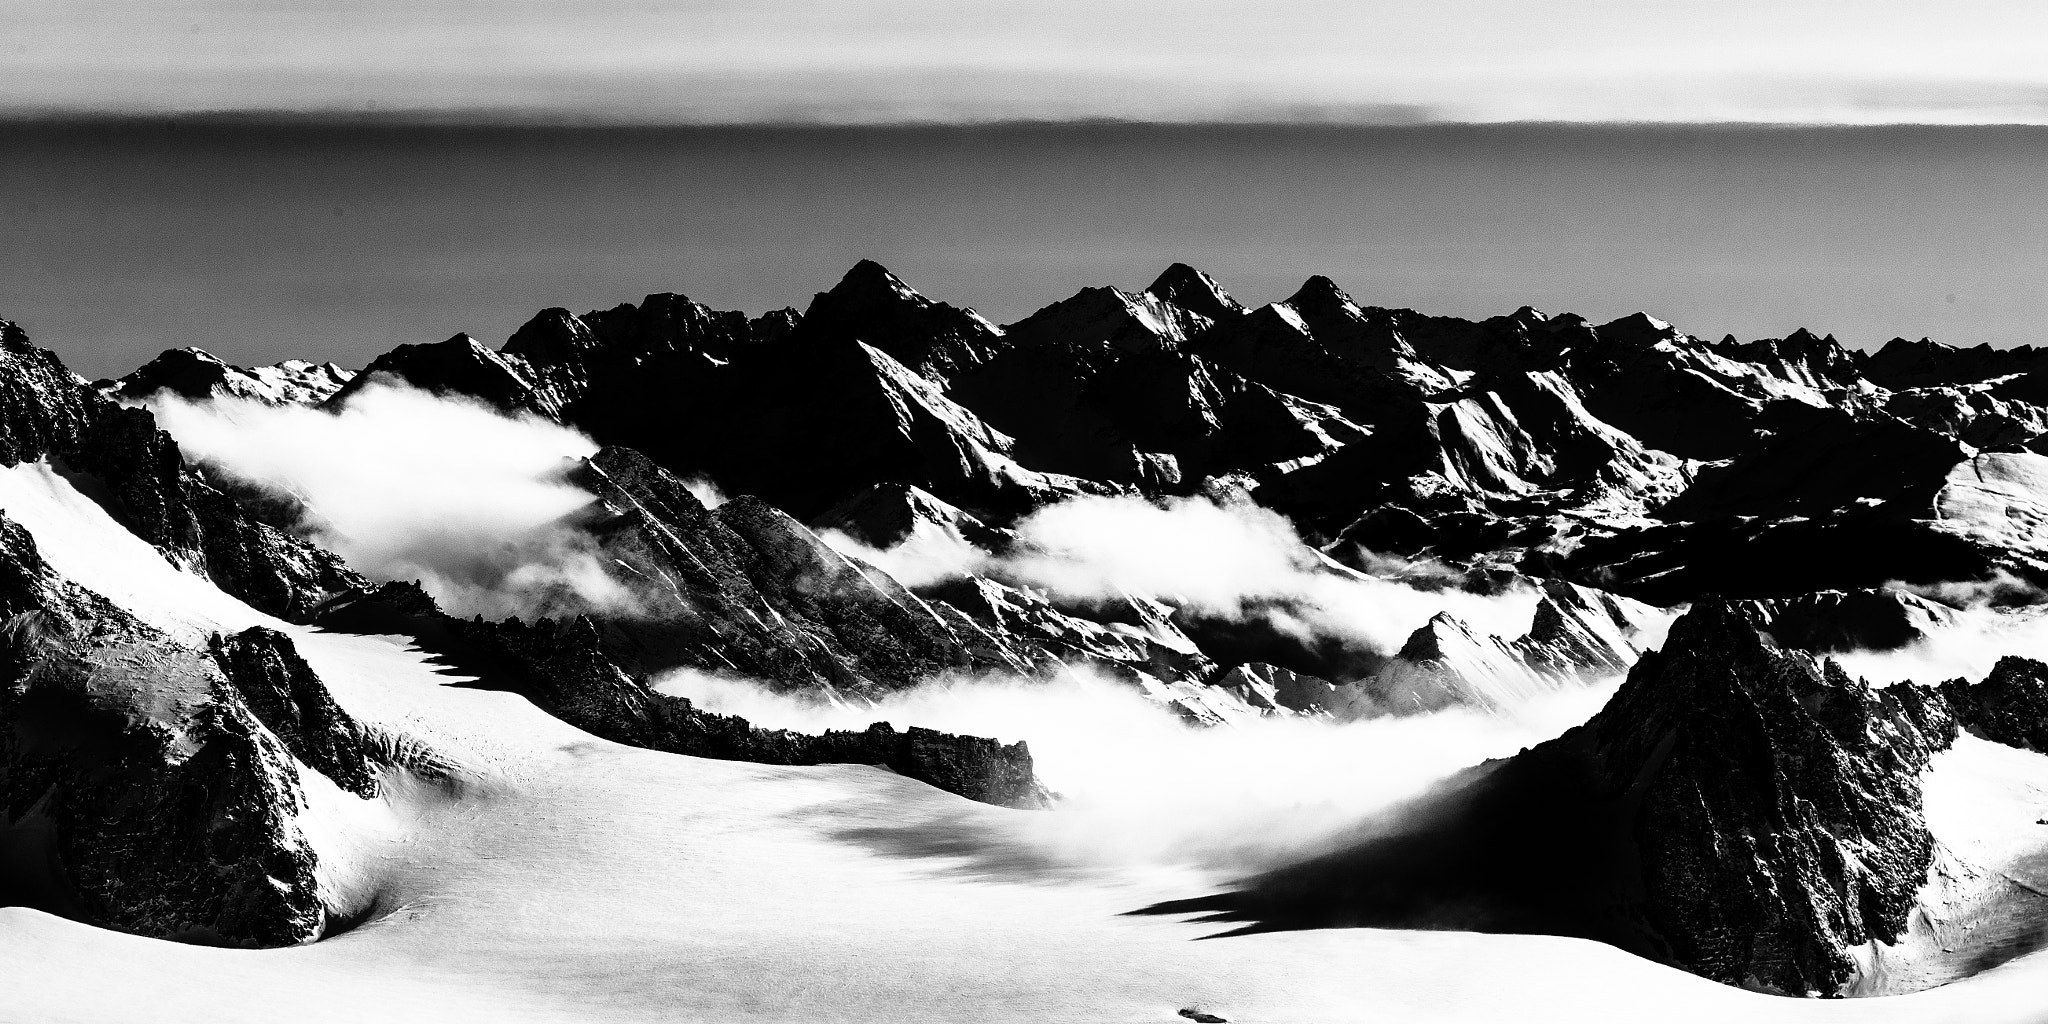 Leica APO-Telyt-M 135mm F3.4 ASPH sample photo. The alps photography